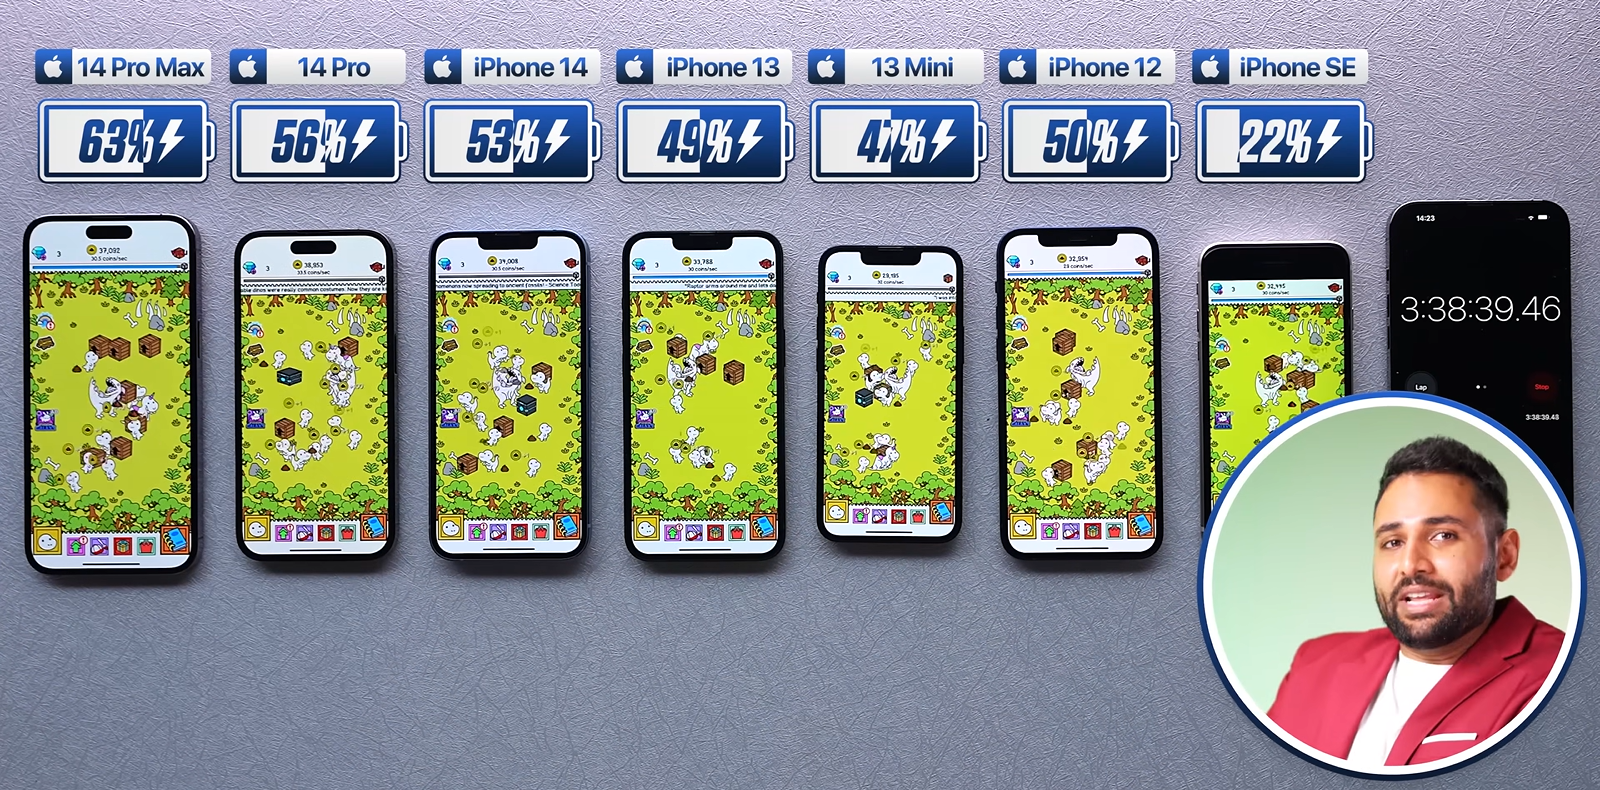 13 pro max 15 pro max сравнение. Модели айфонов. Айфоны по размерам. Iphone 14 Pro Max. Айфон 13 расцветки.